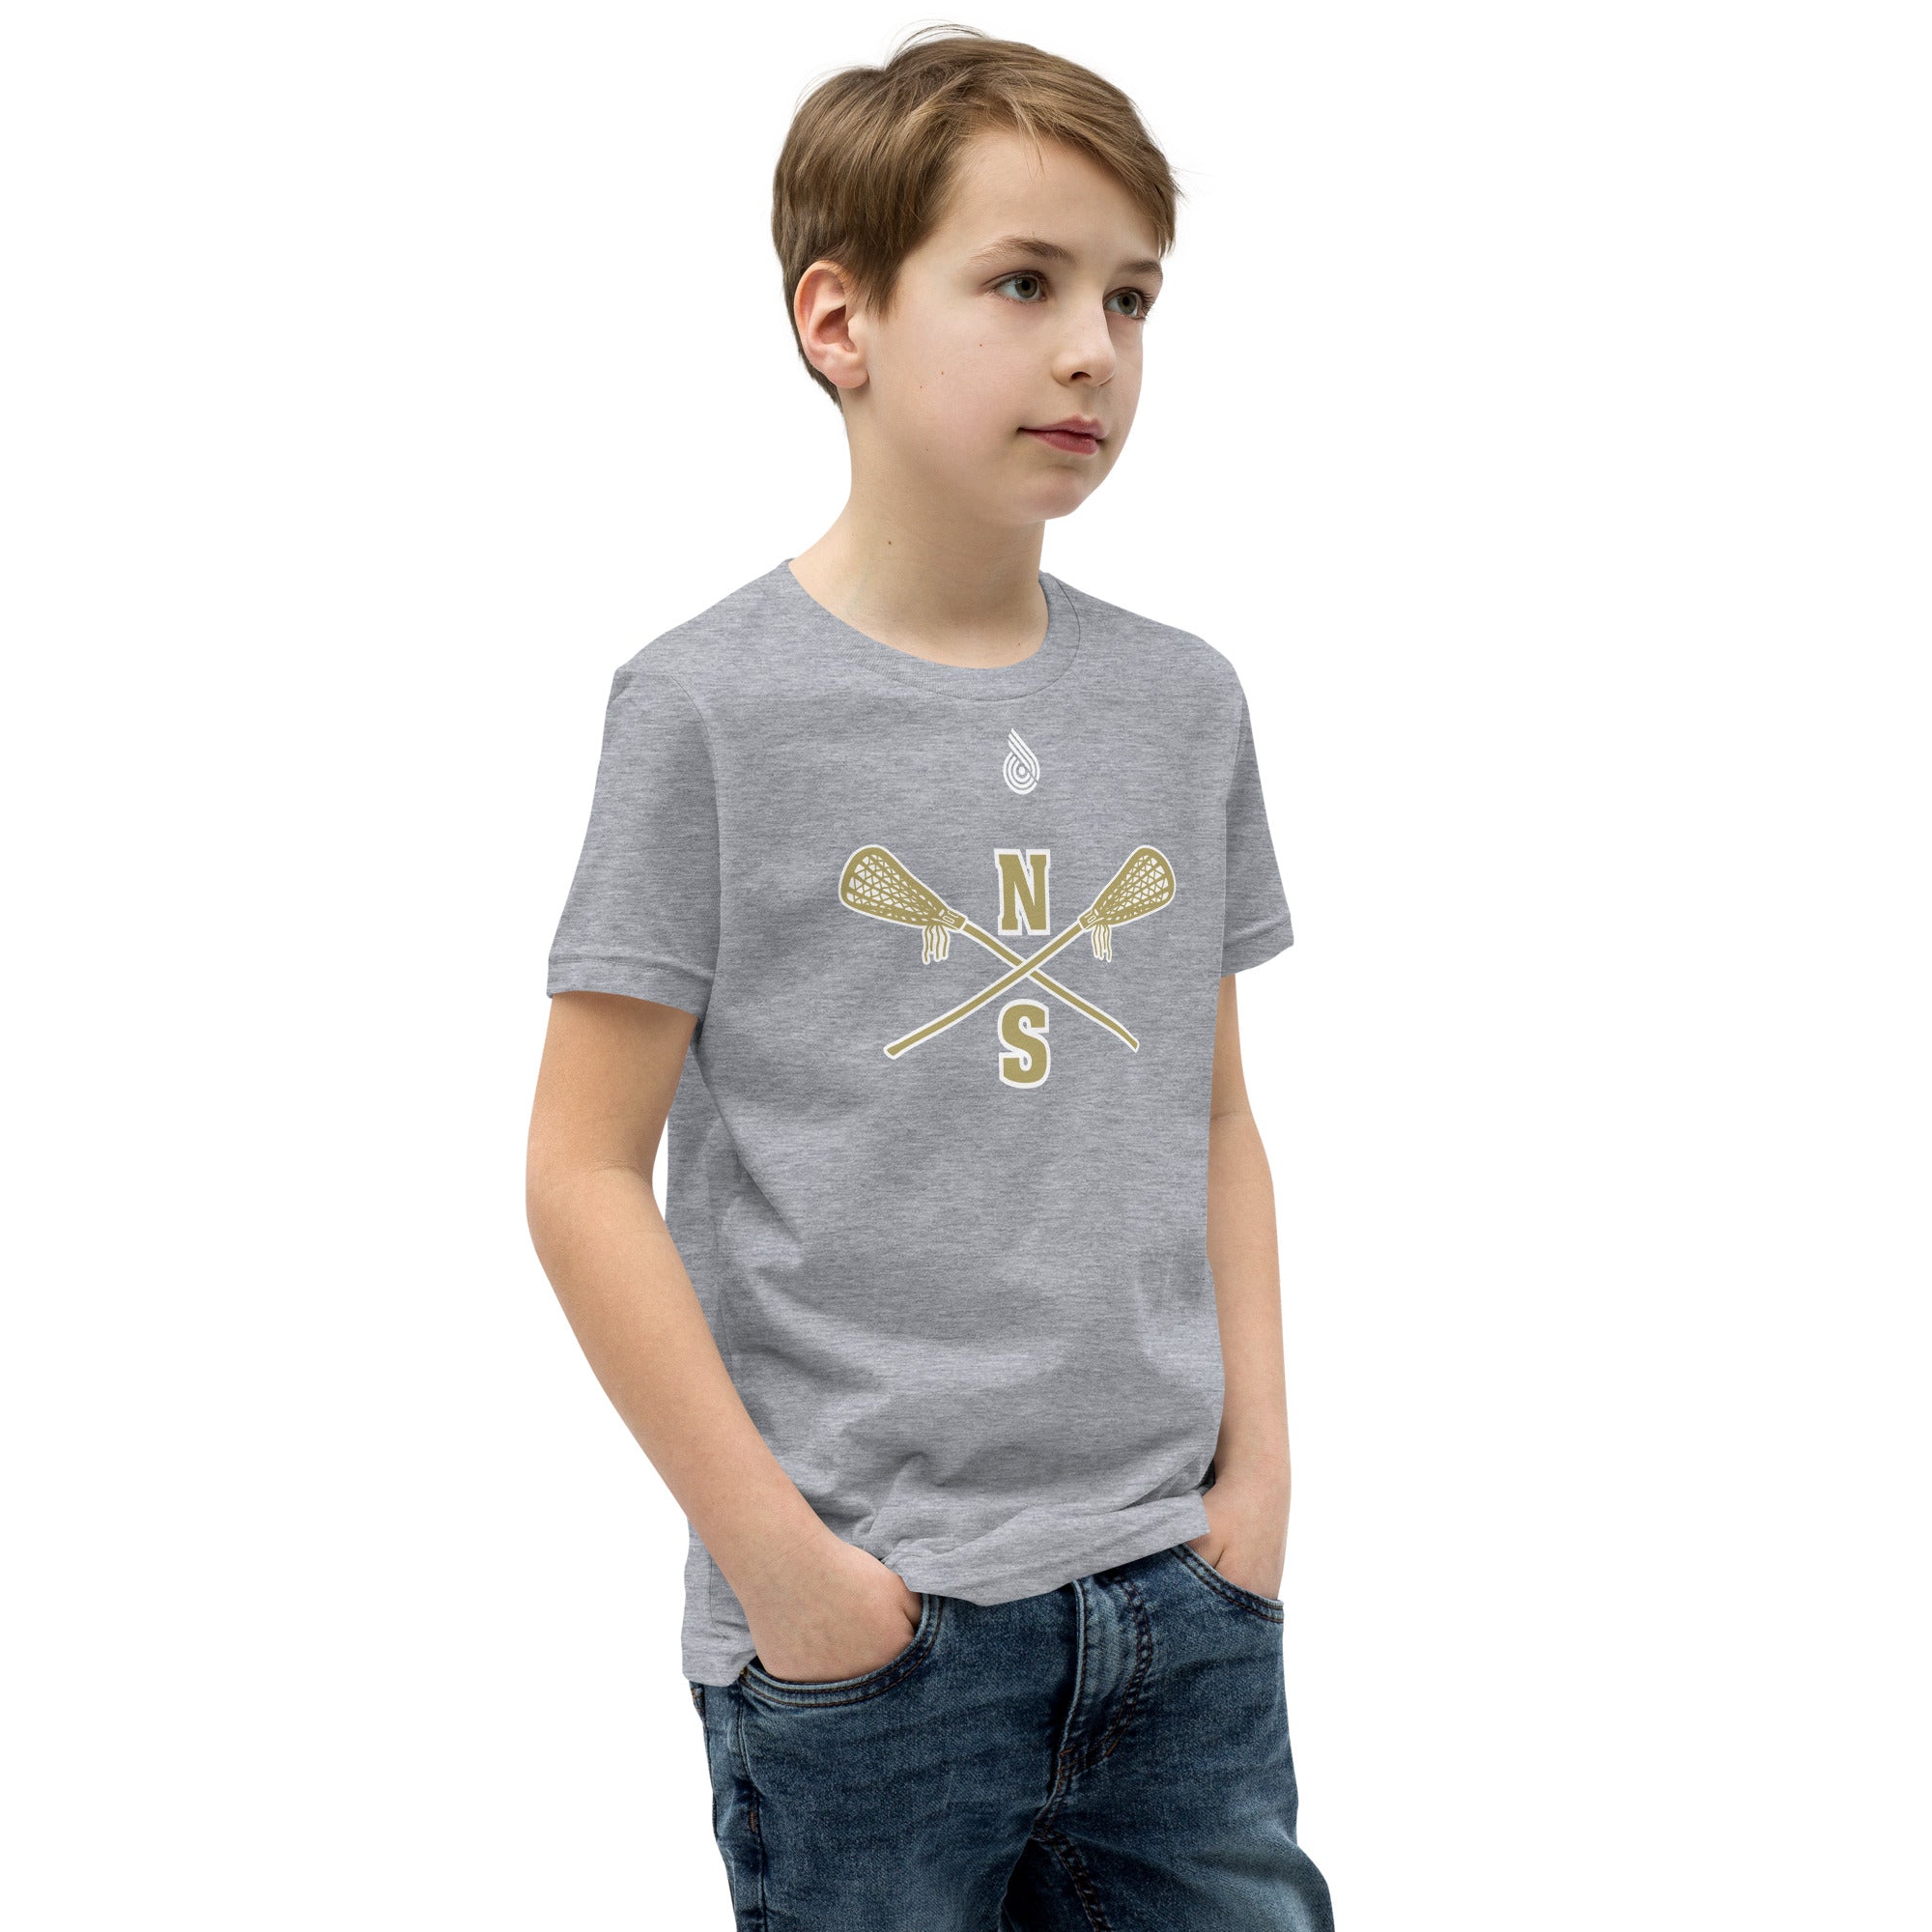 N-S Youth Short Sleeve T-Shirt (Boys Logo)